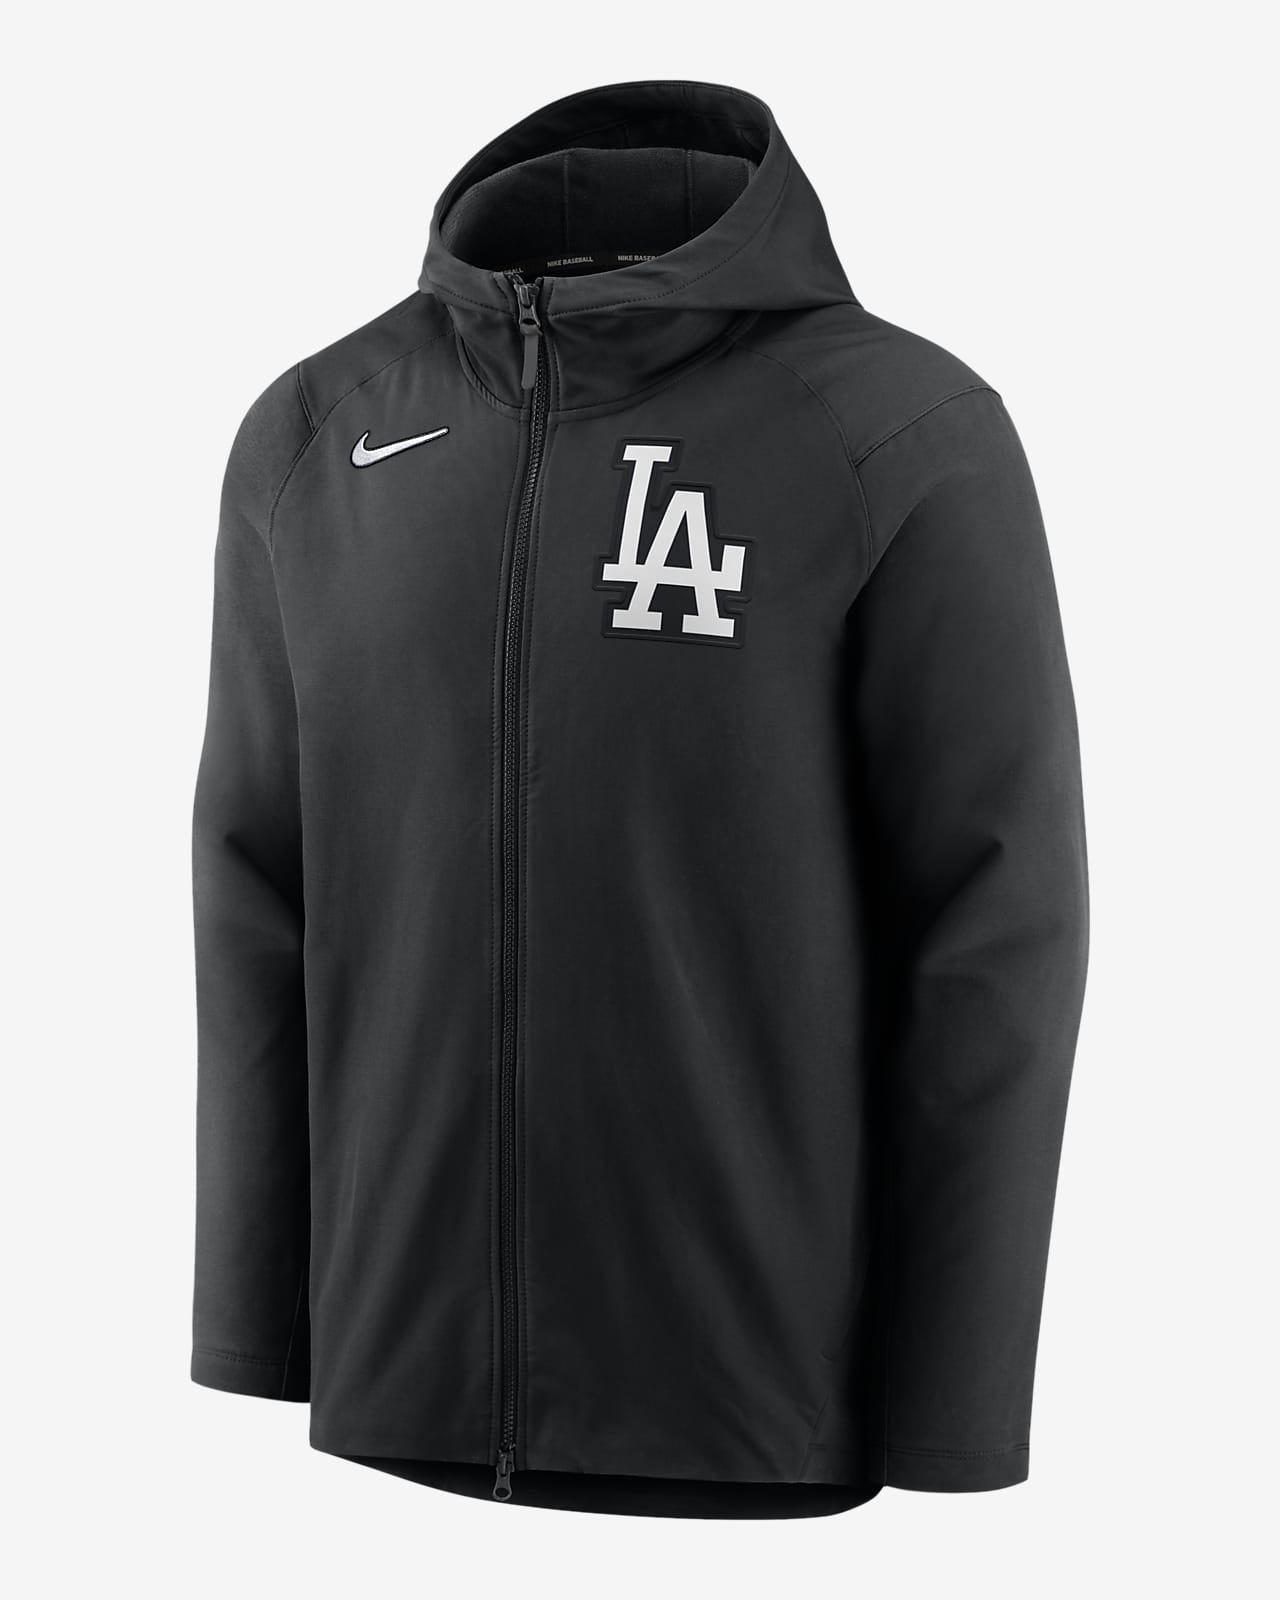 Nike Therma Player (MLB Los Angeles Dodgers) Men's Full-Zip Jacket